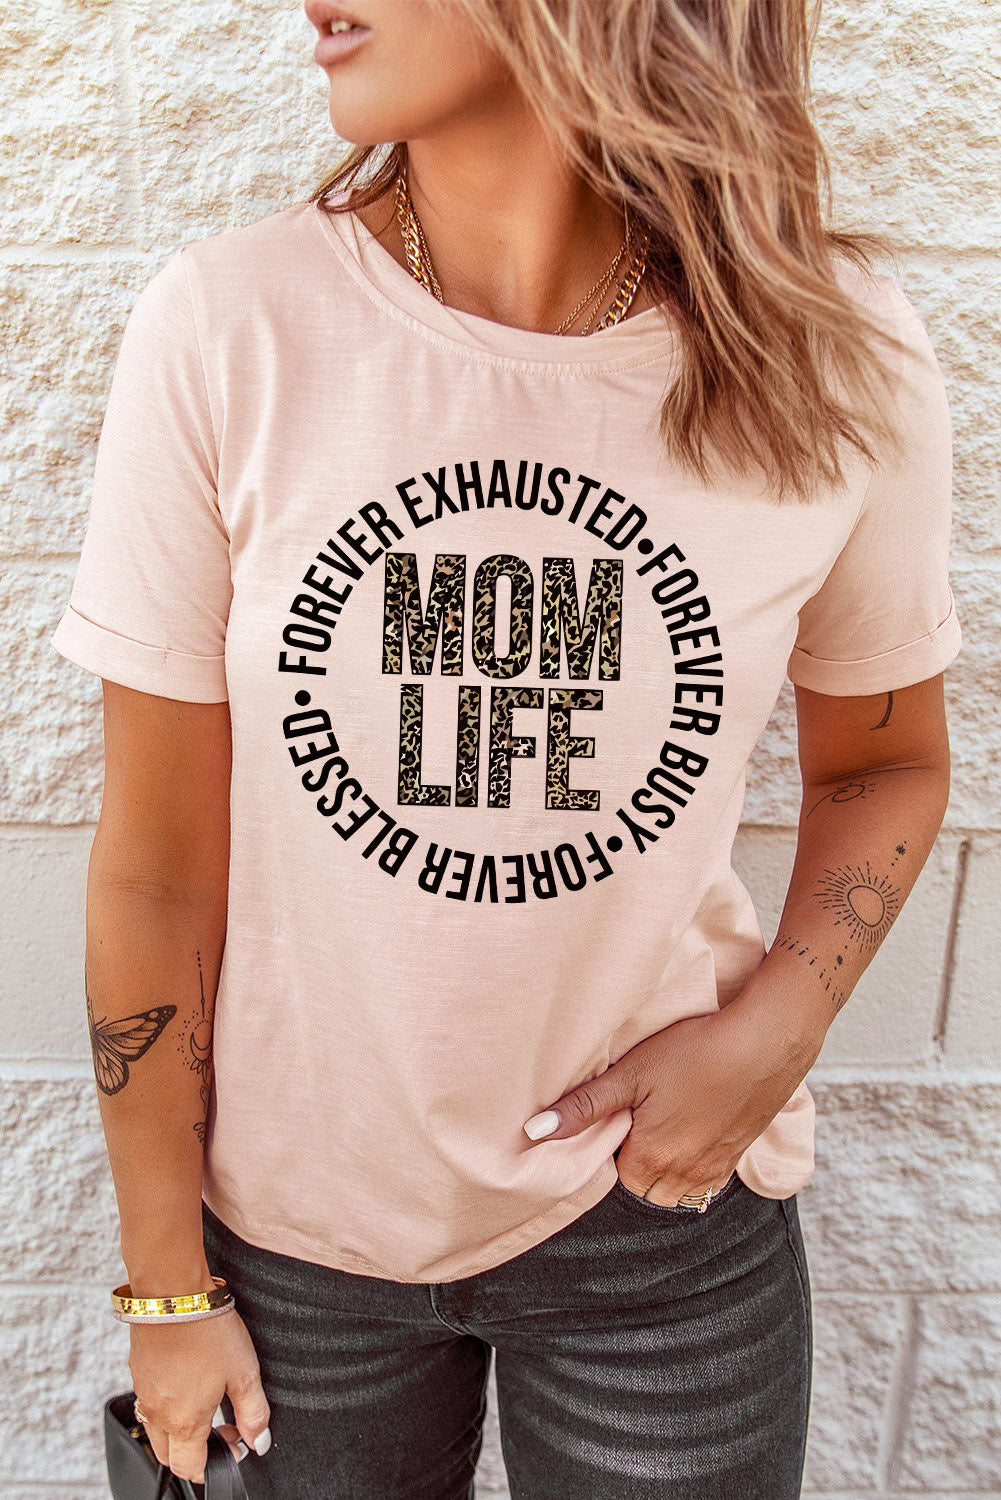 Pink Mom Life Letter Leopard Print Short Sleeve T Shirt